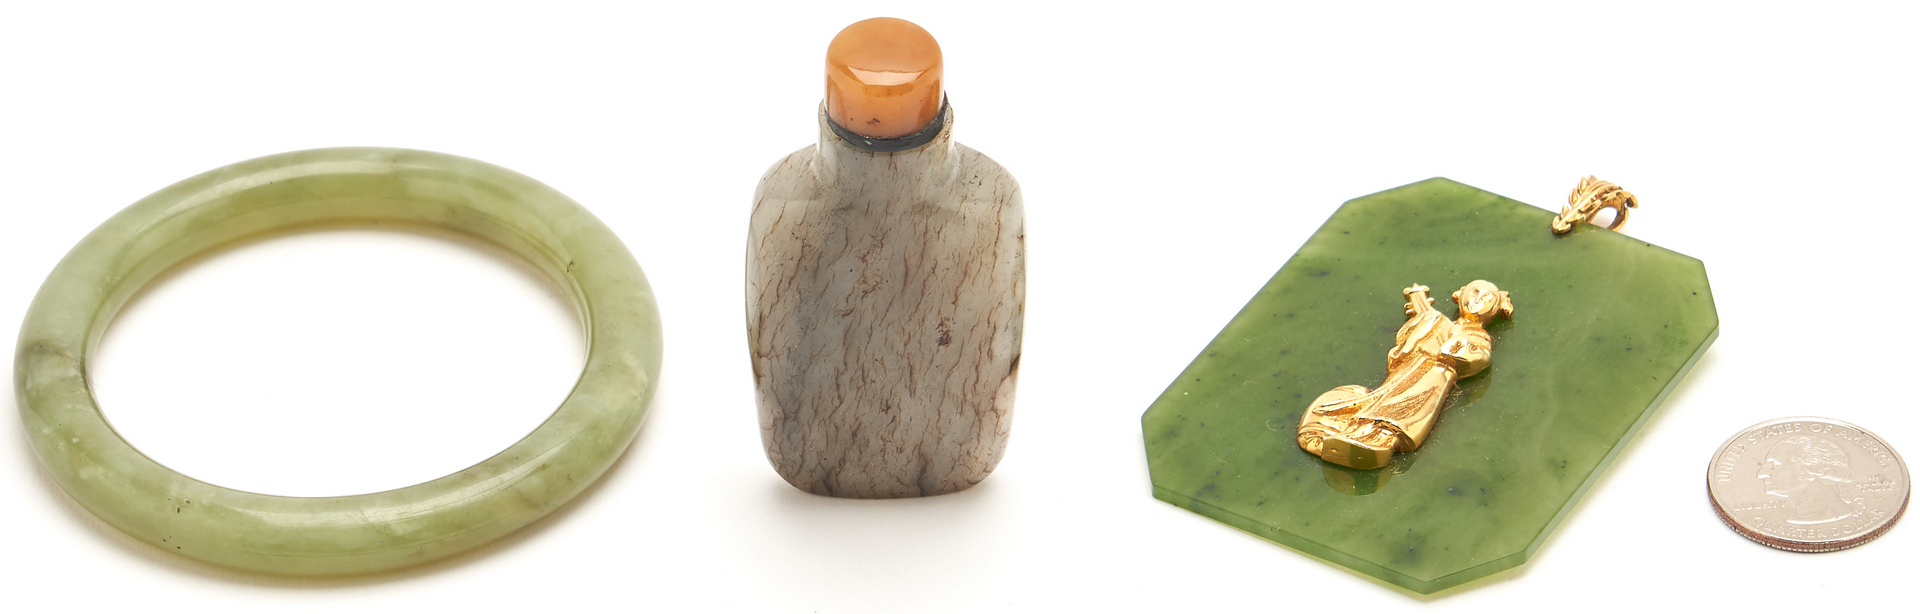 Lot 23: 3 Chinese Jade Items, Pendant, Bangle & Snuff Bottle